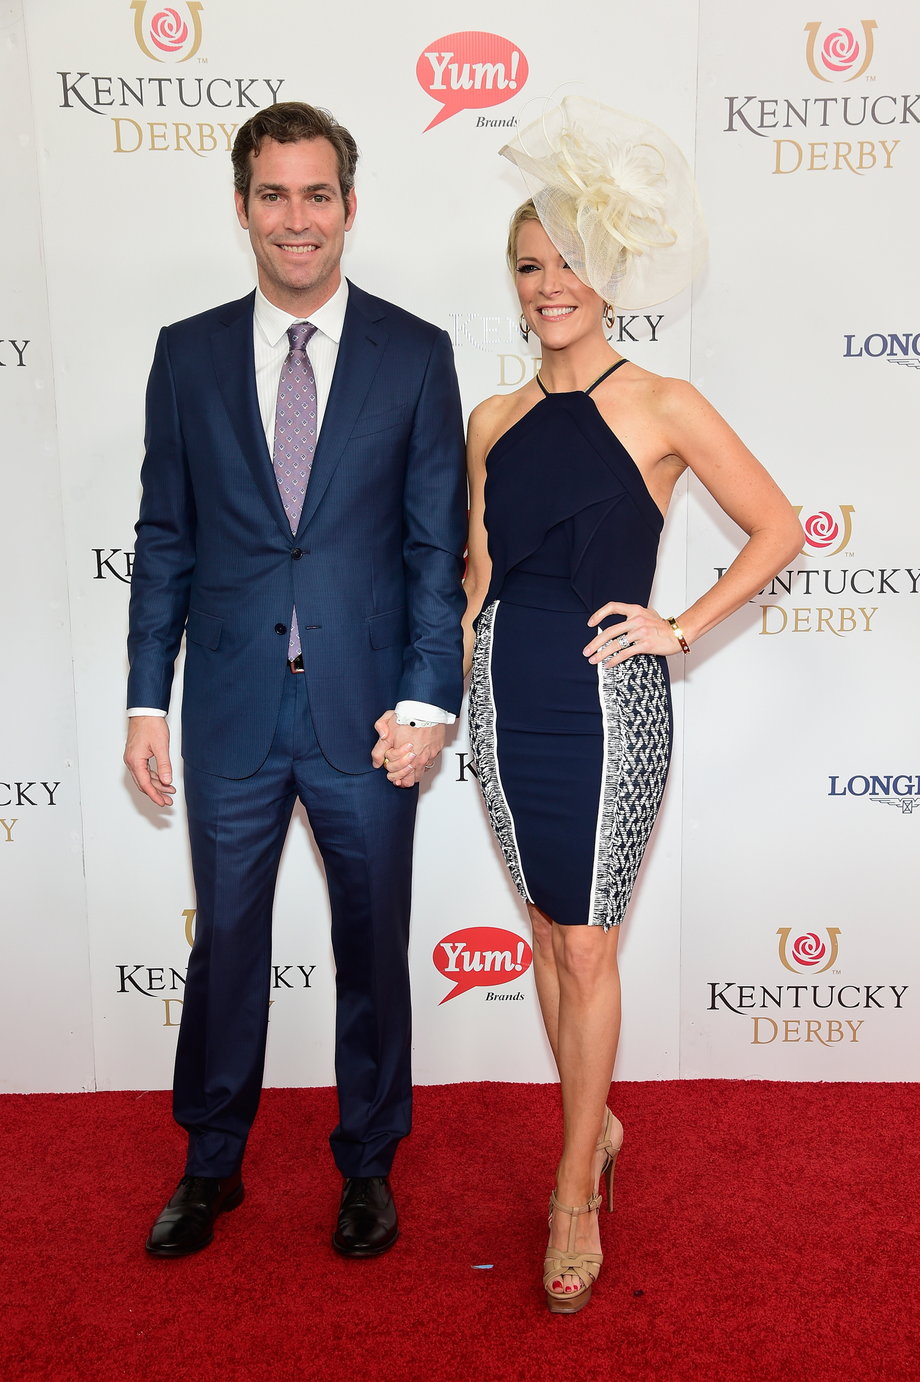 BEST: Novelist Douglas Brunt and Fox News reporter Megyn Kelly made an elegant pair in navy blue.